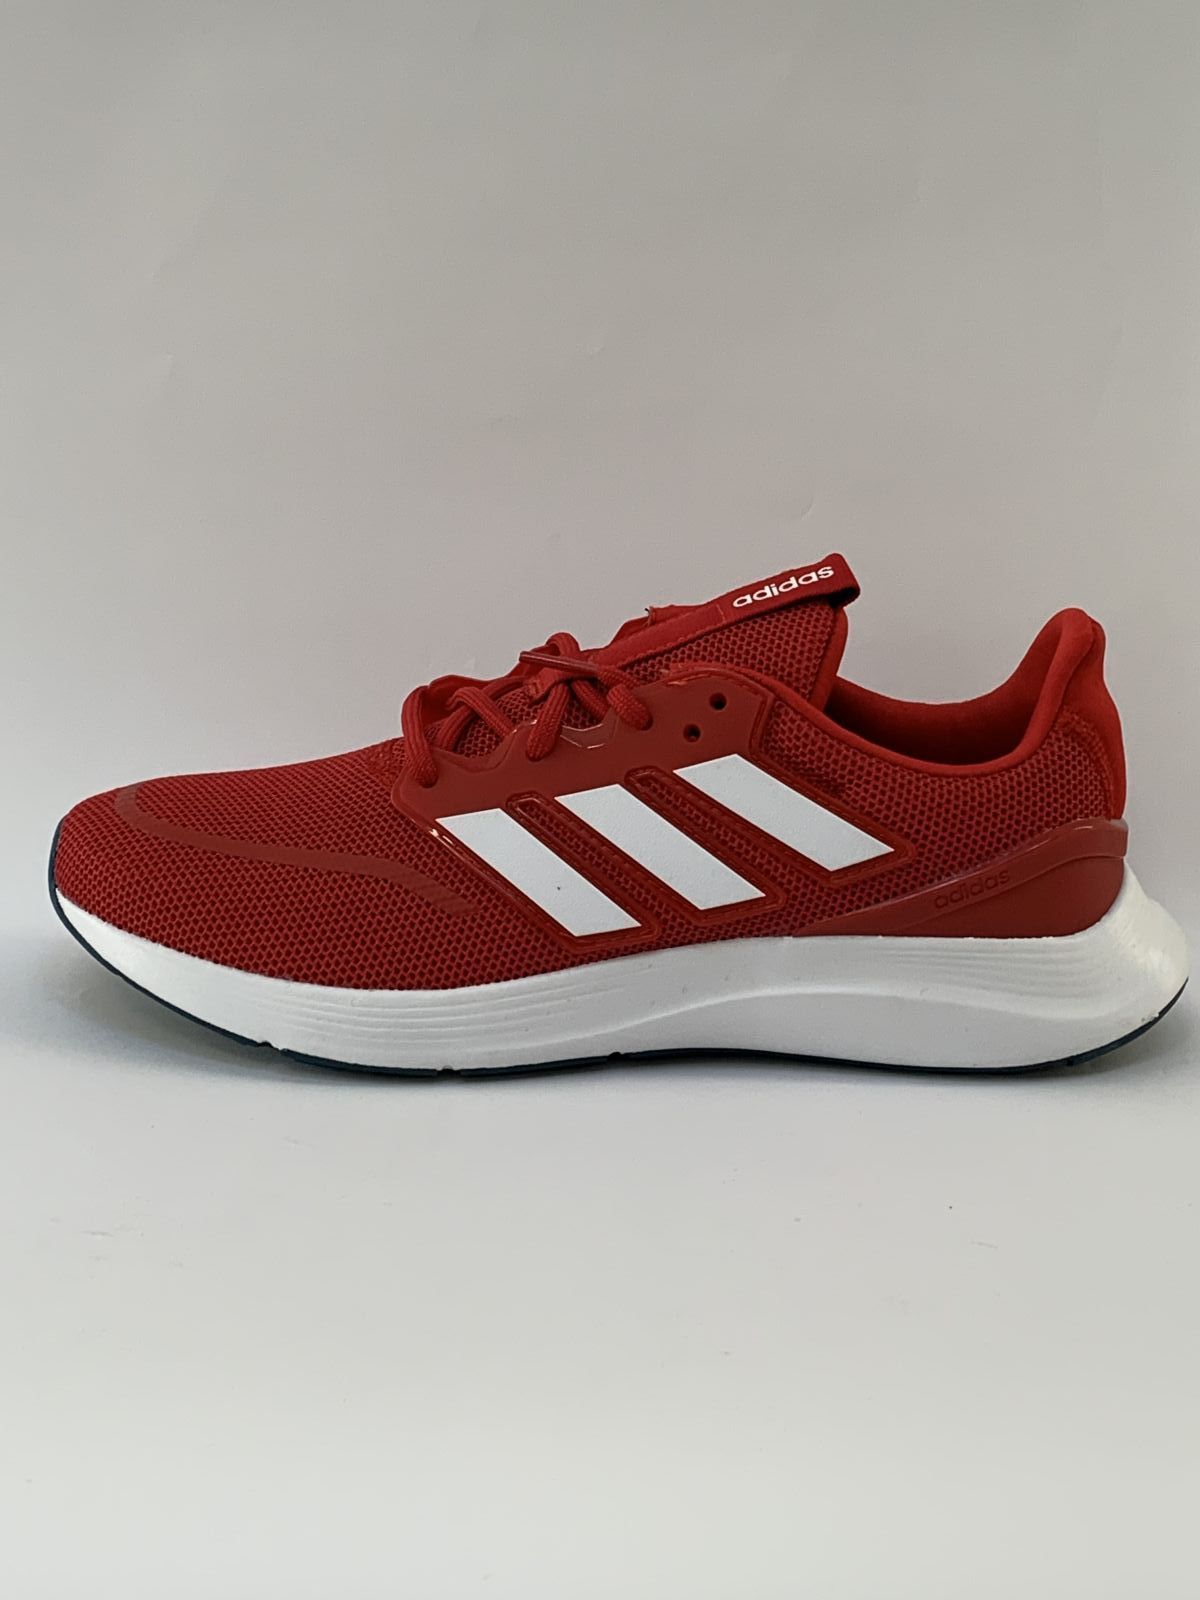 Adidas Sneaker Rood heren (Runner Energy Rood - EG2925) - Schoenen ...